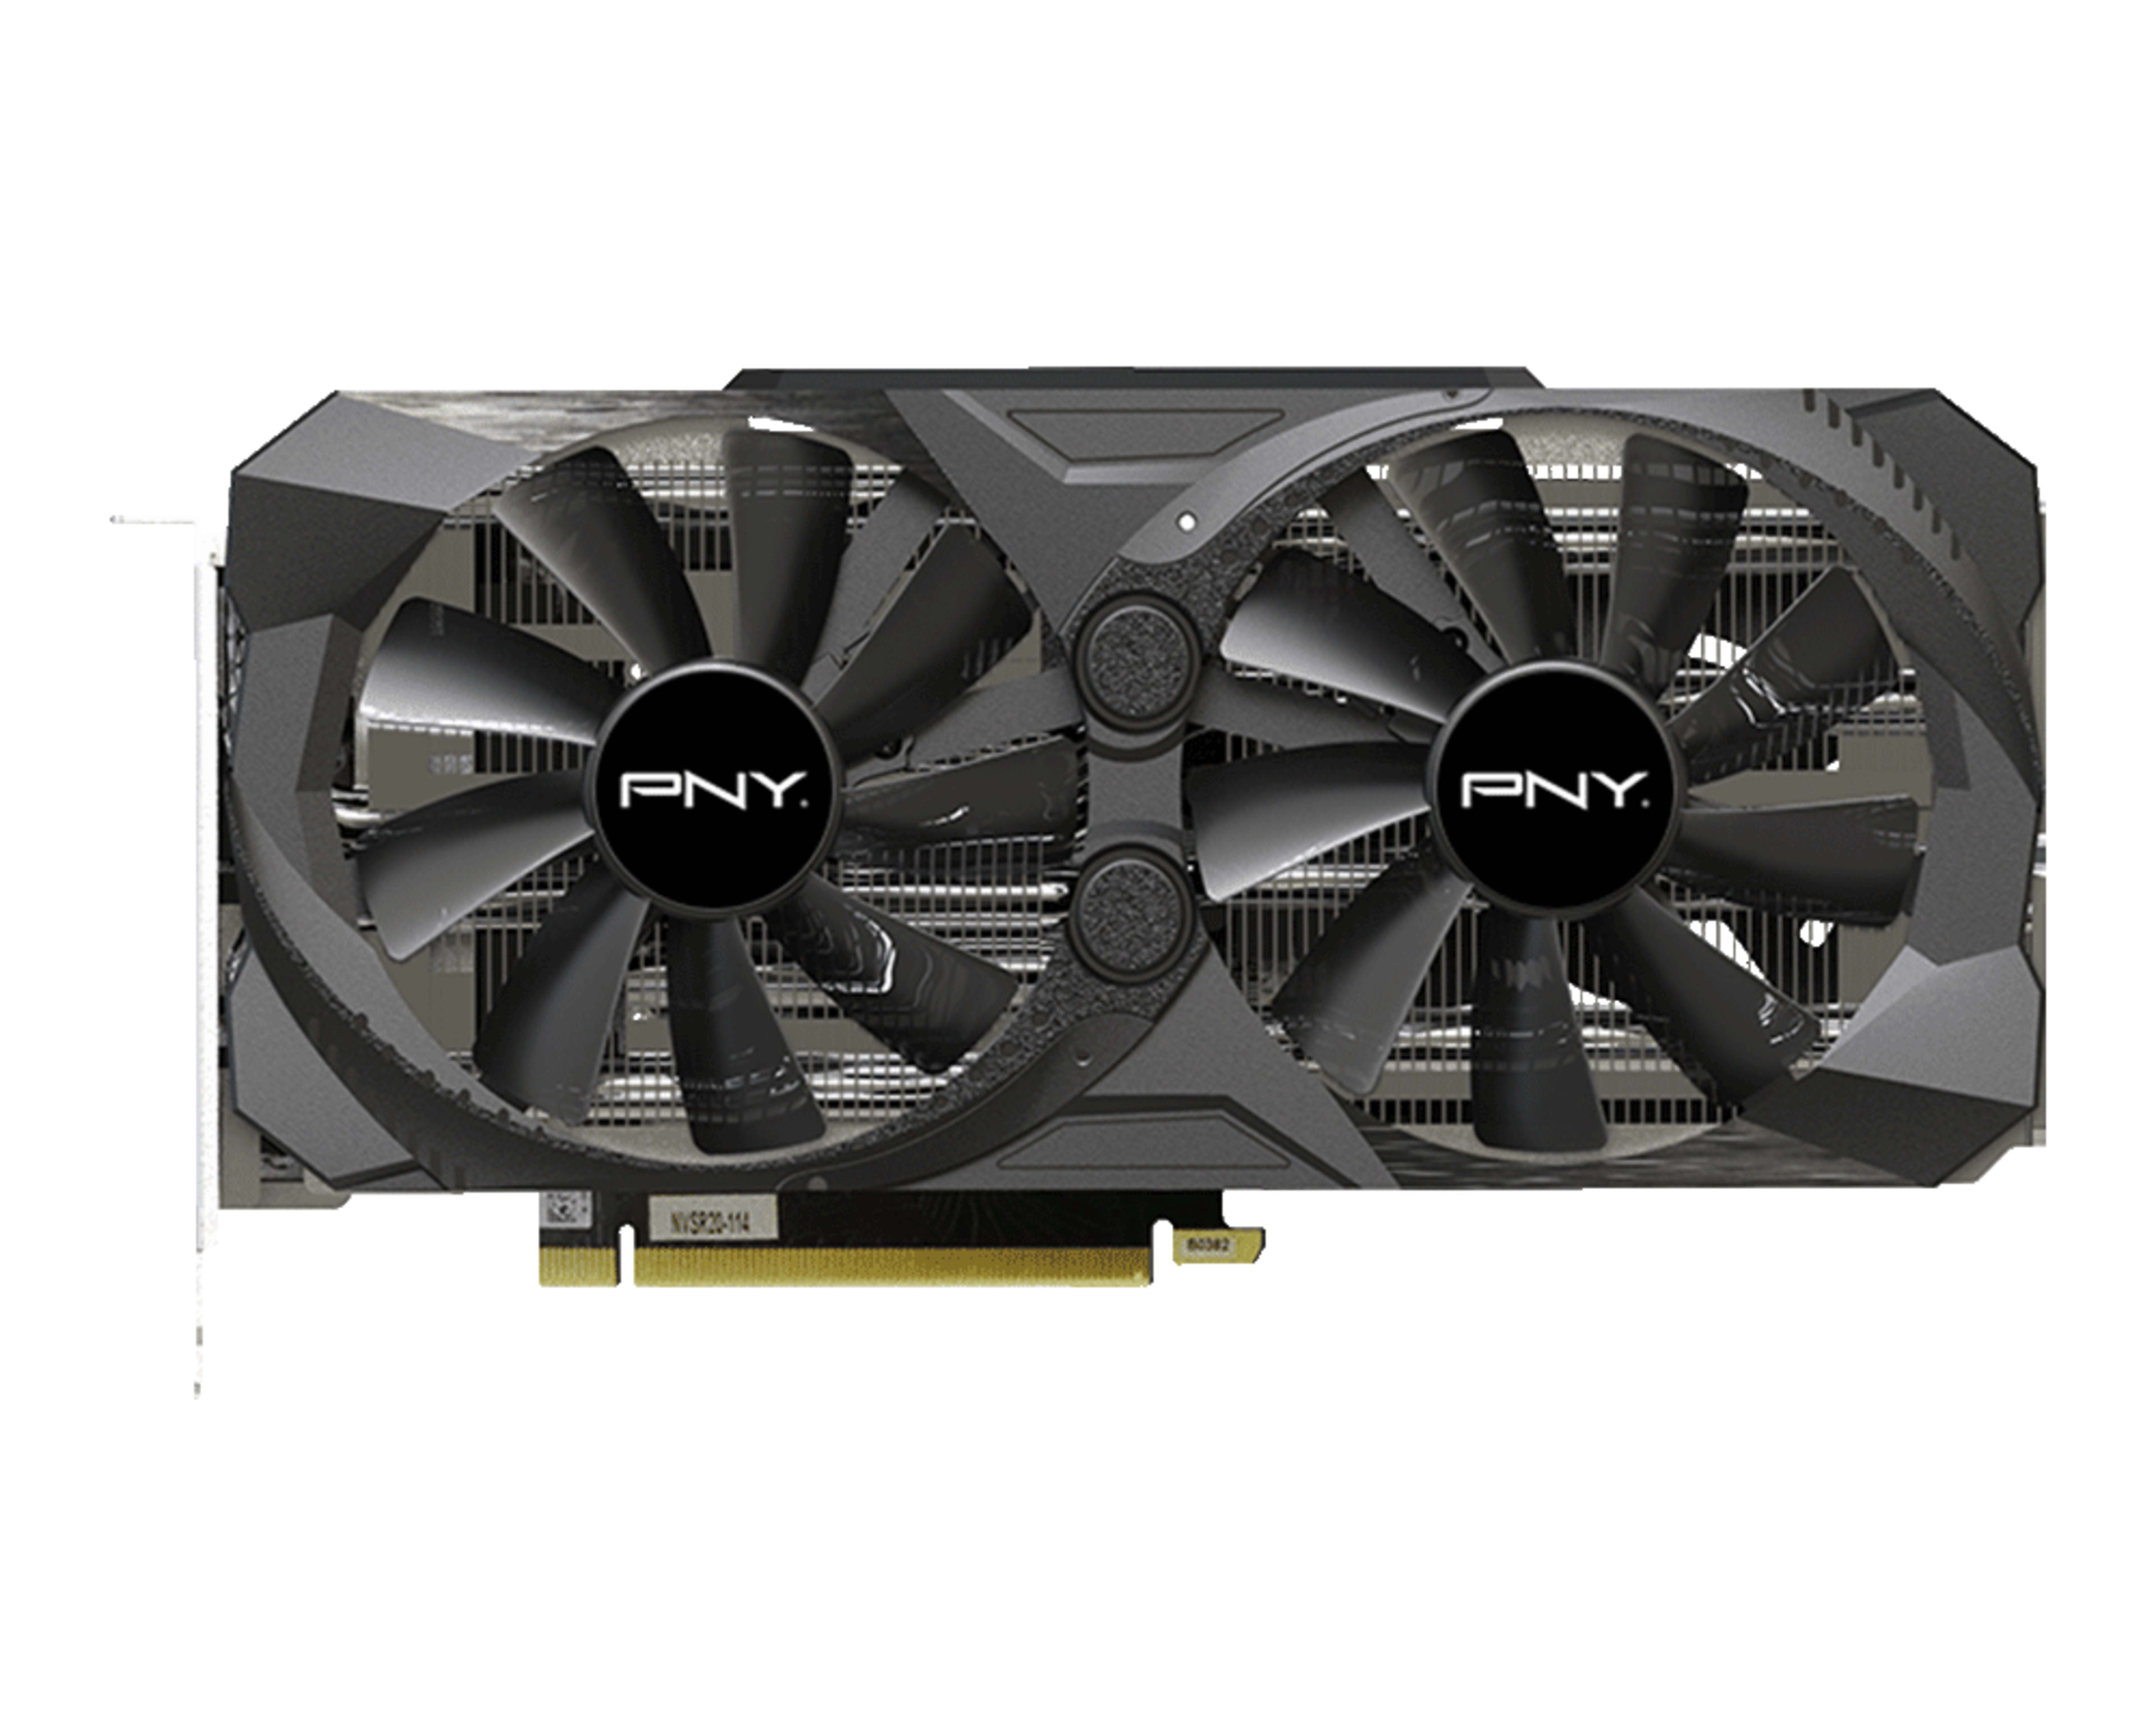 PNY RTX 3070 8GB UPRISING Dual Fan LHR GPU - USED